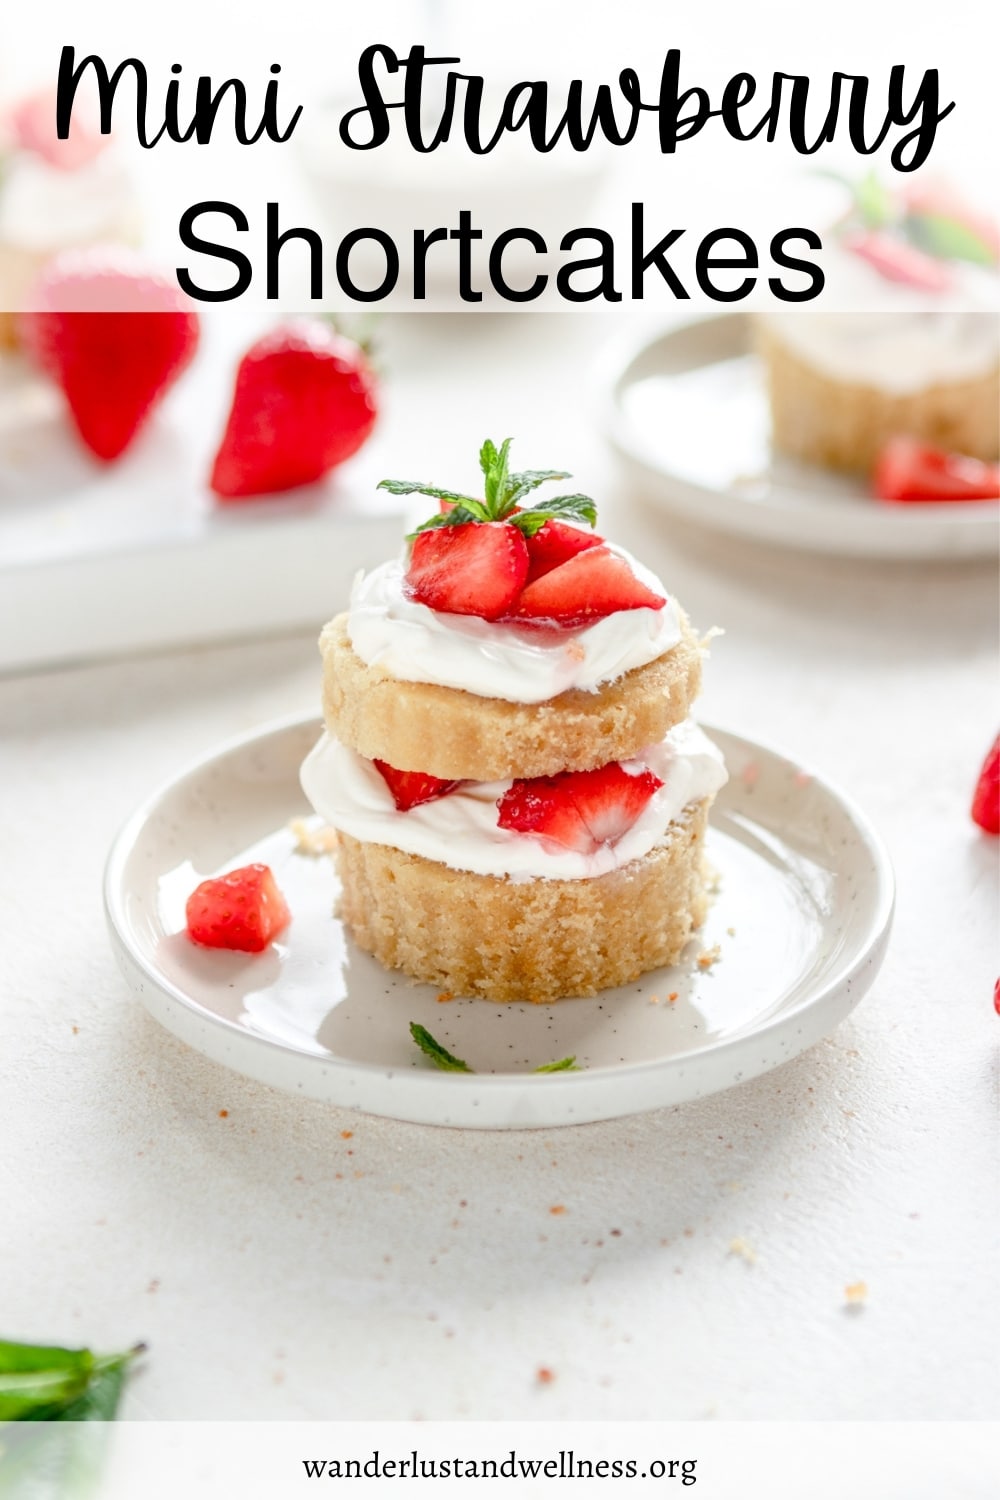 a mini strawberry shortcake on a plate